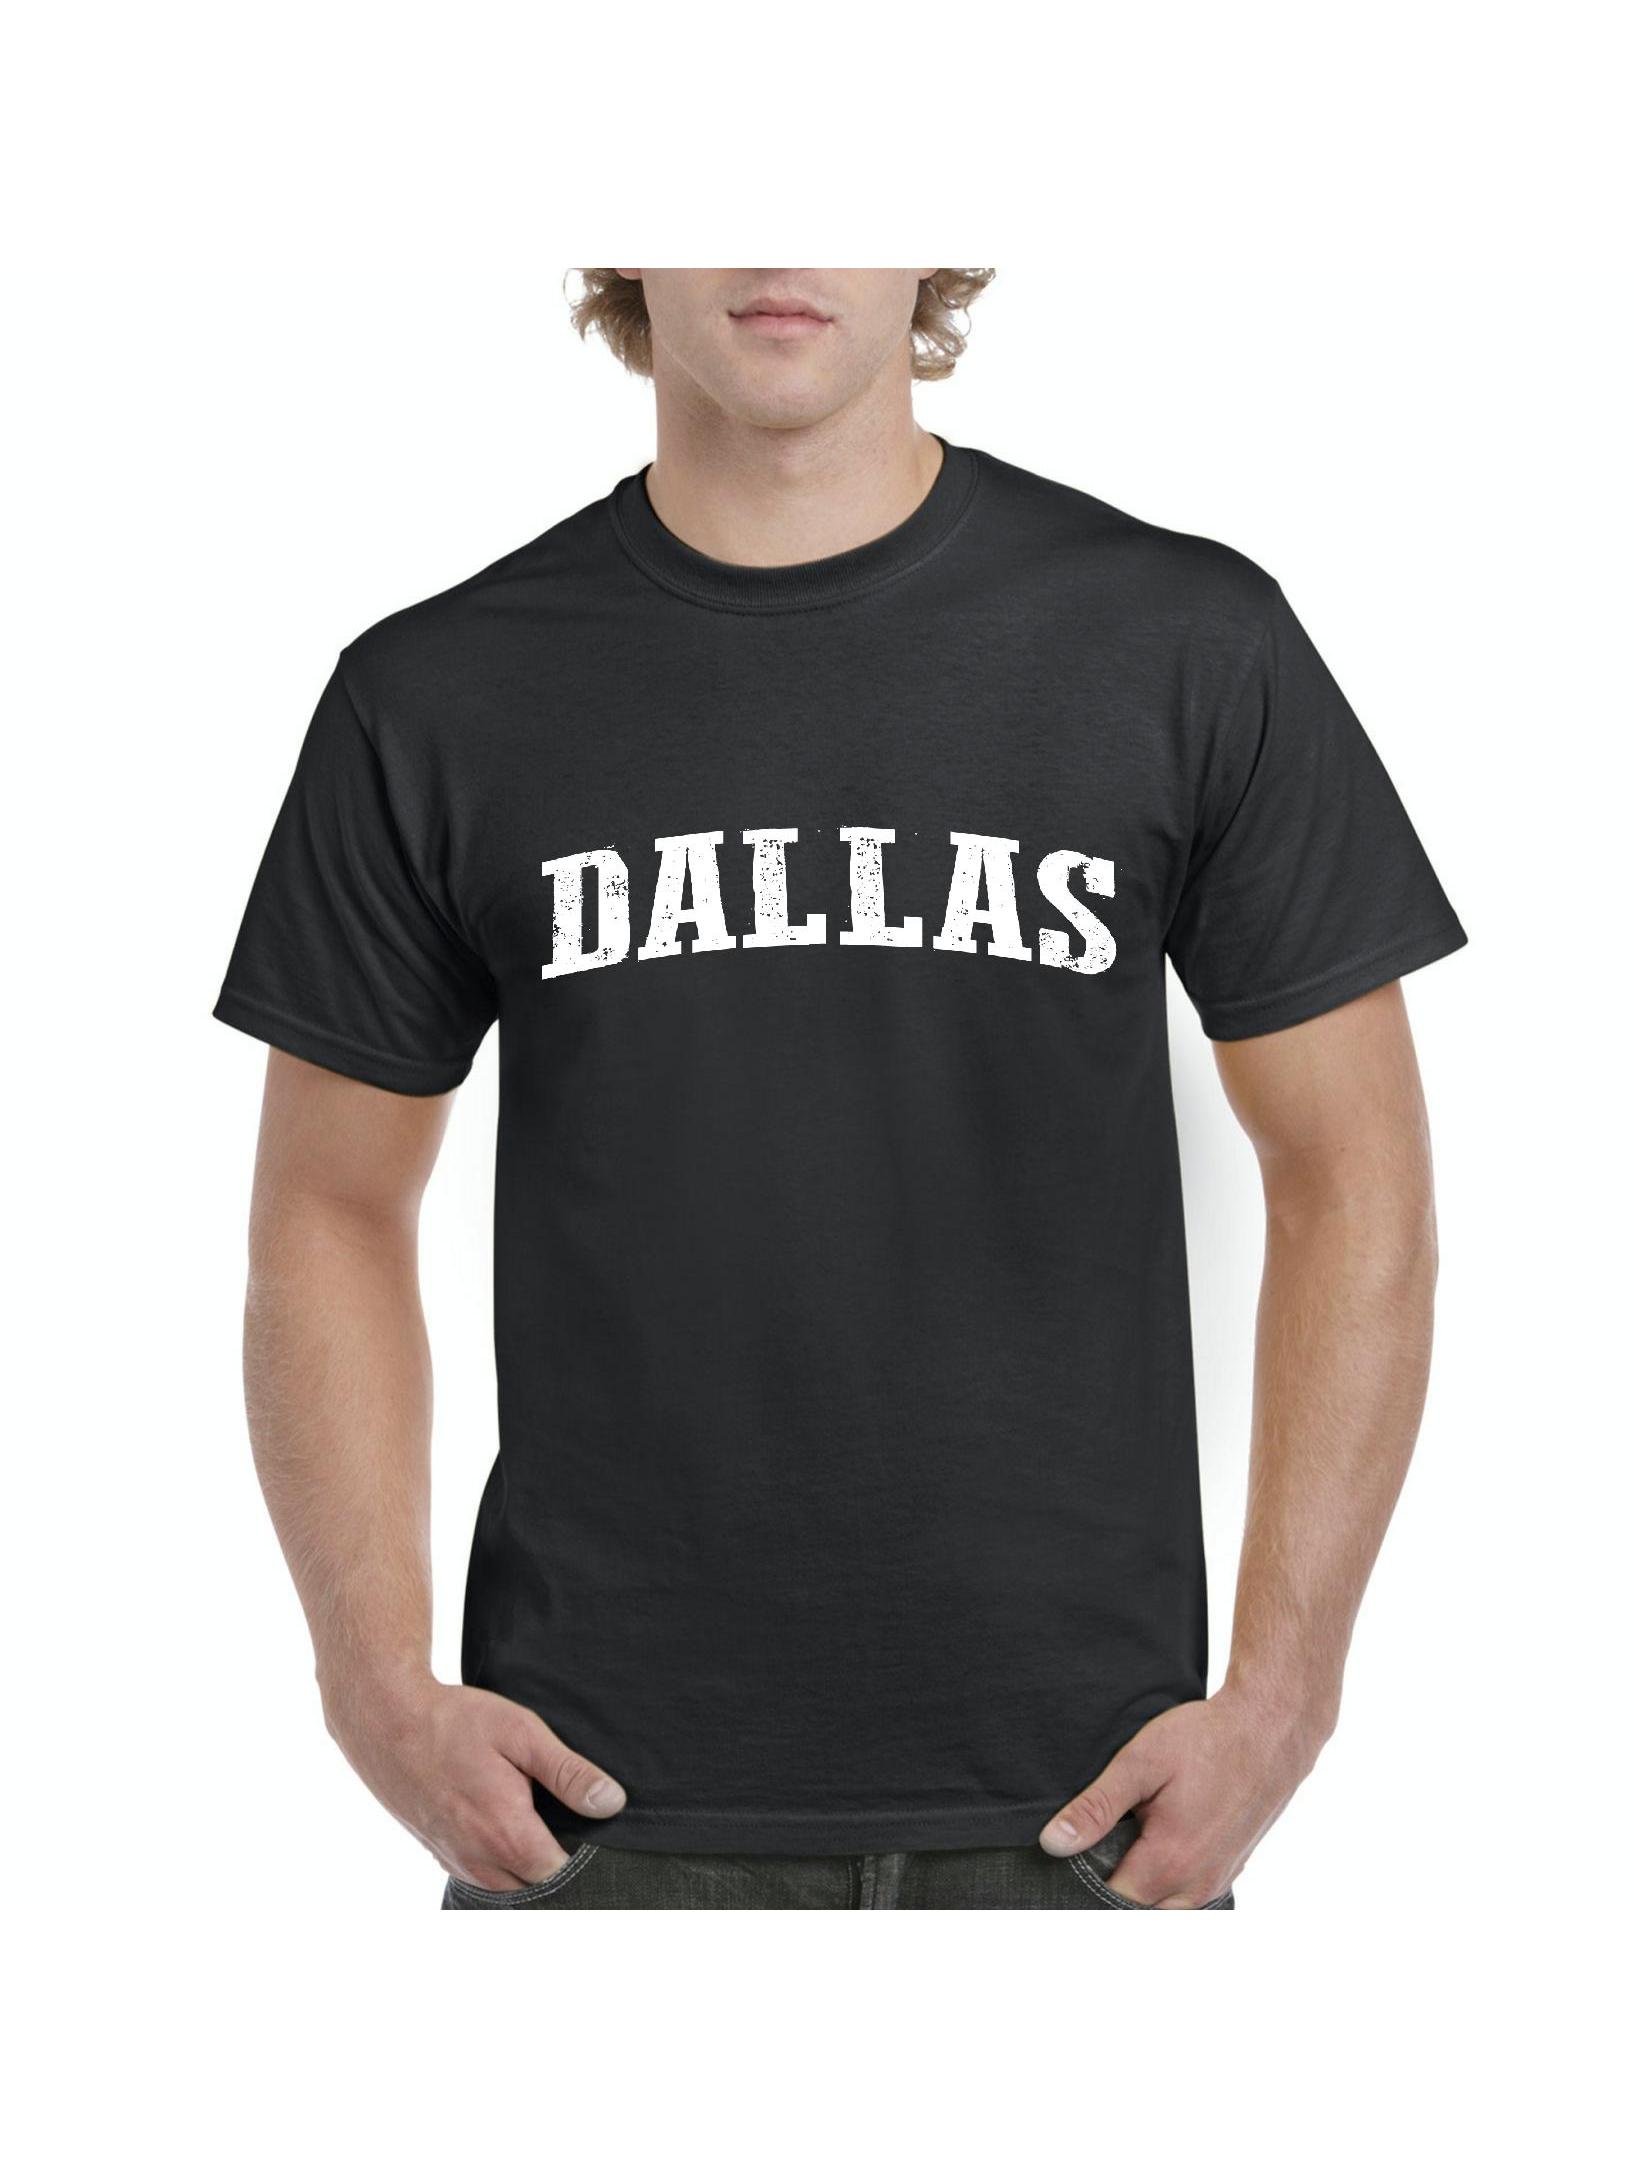 Men's T-Shirt Short Sleeve - Dallas - image 1 of 5